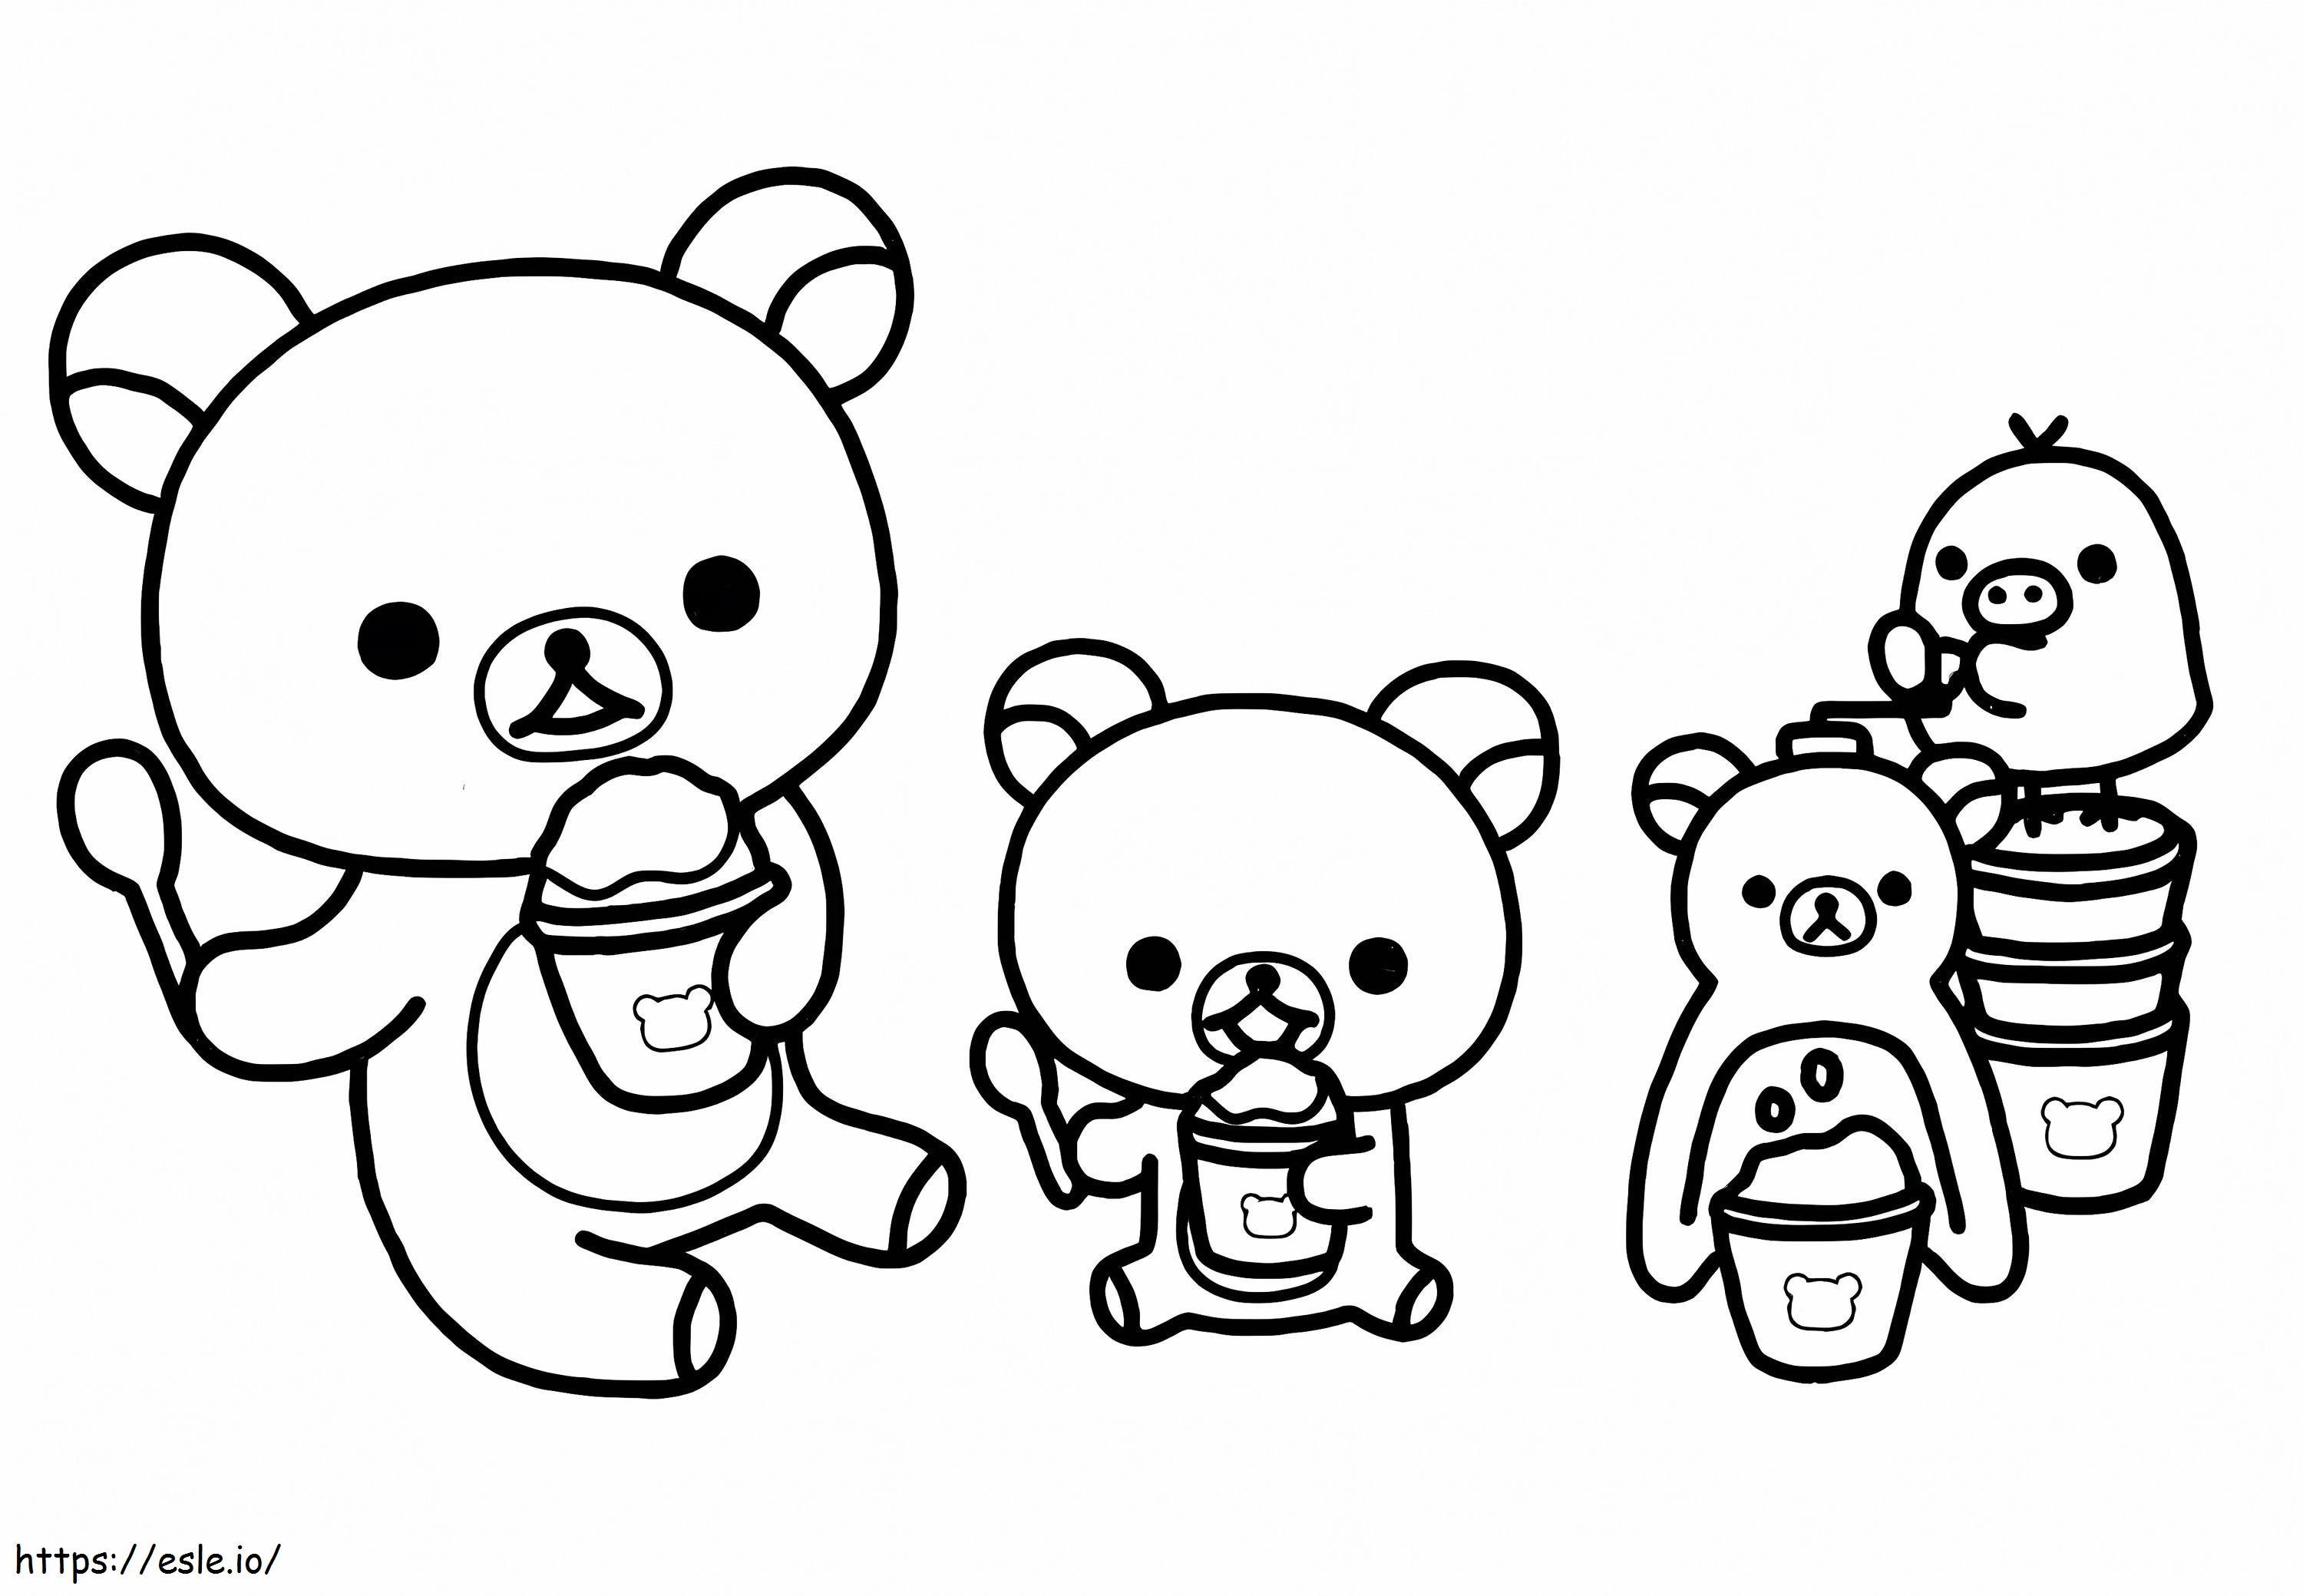 Rilakkuma Eating Ice Cream coloring page